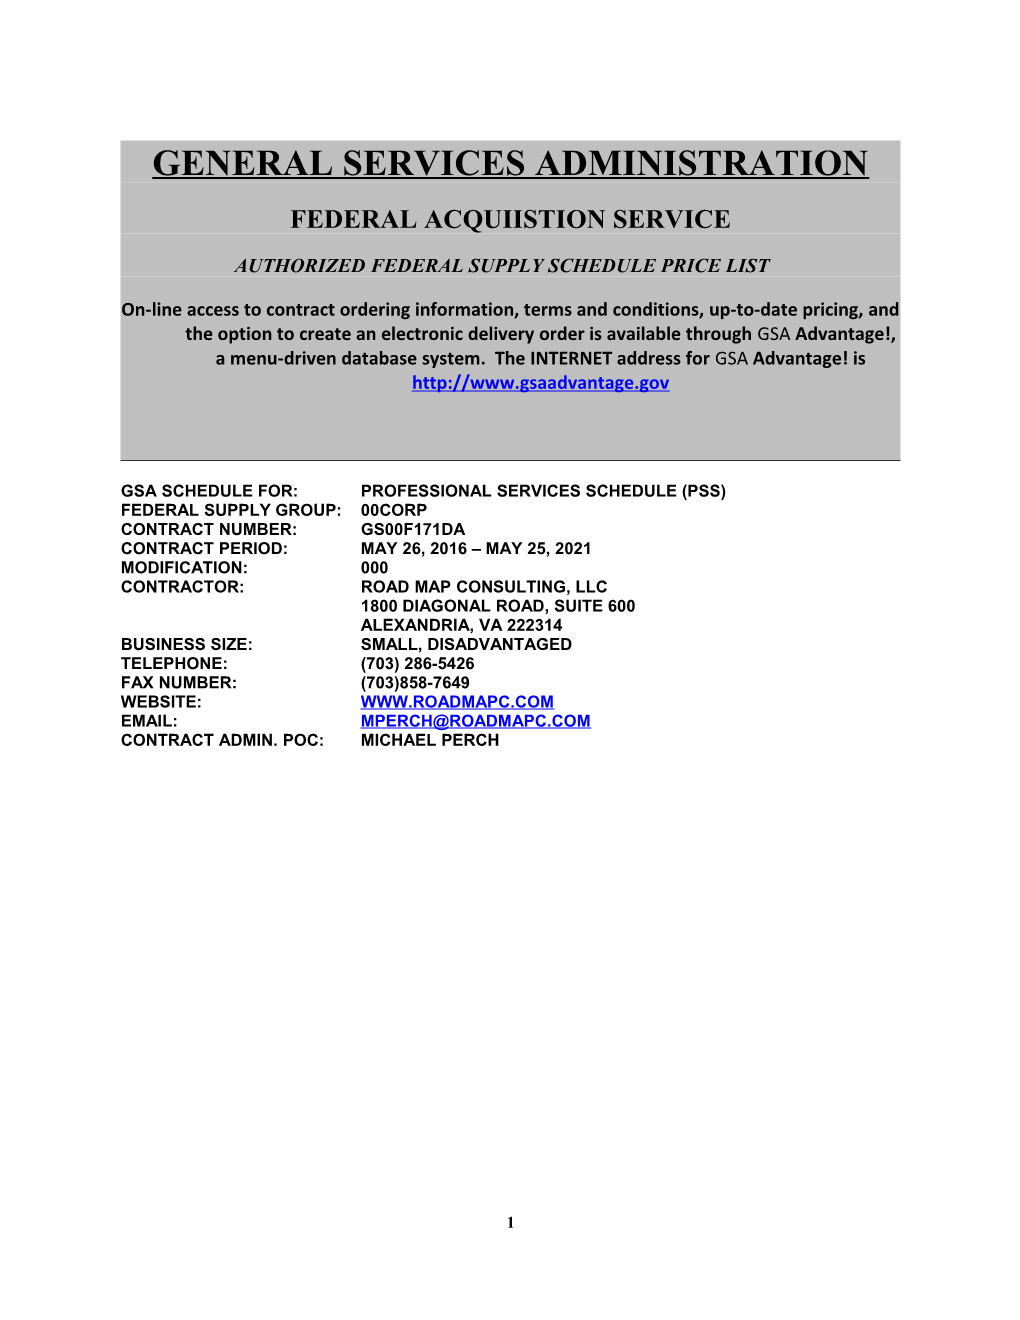 Authorized Federal Supply Scheduleprice List